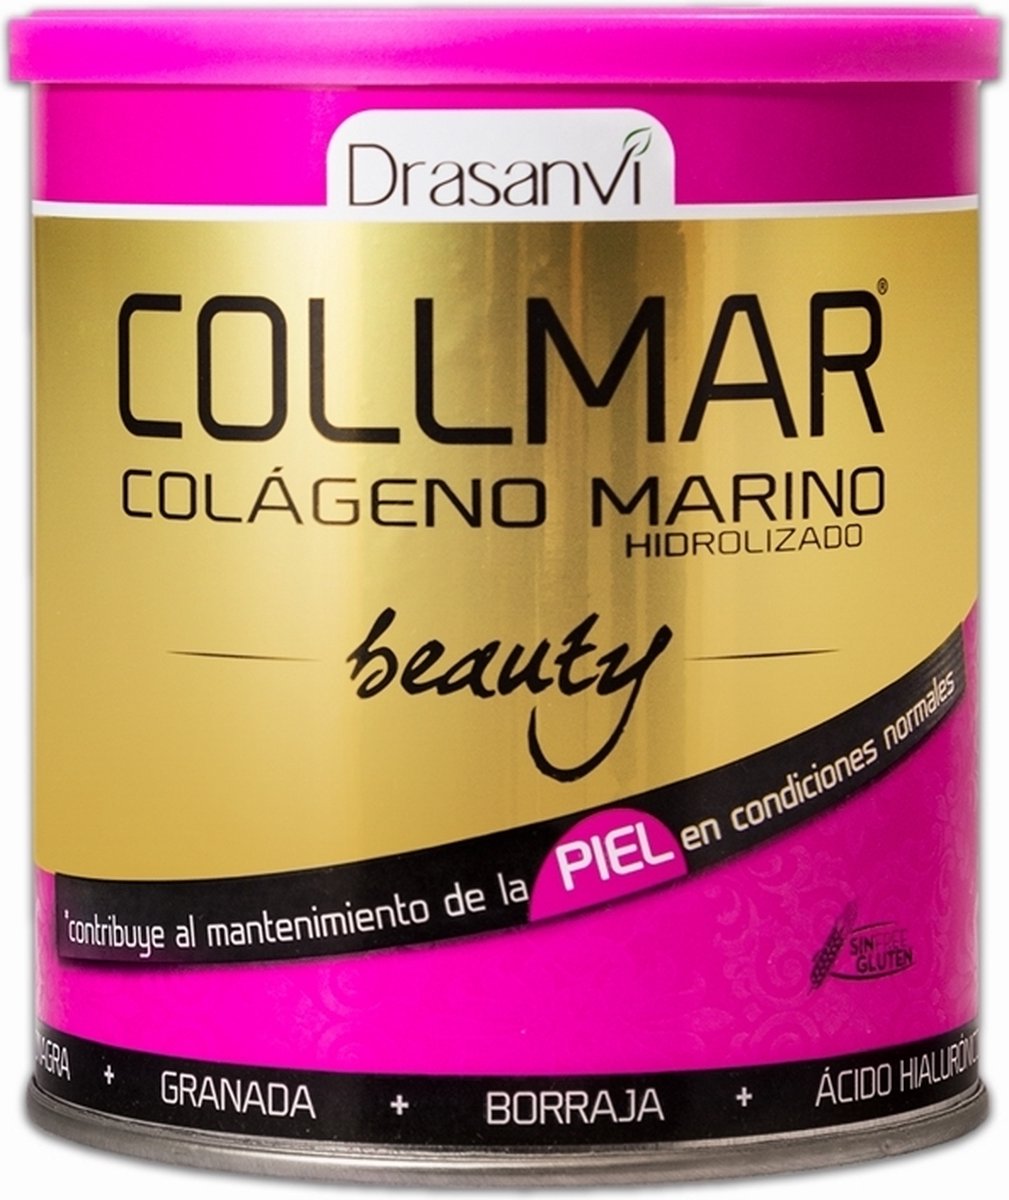 Gehydrolyseerd collageen Collmar Beauty Drasanvi (275 gr)